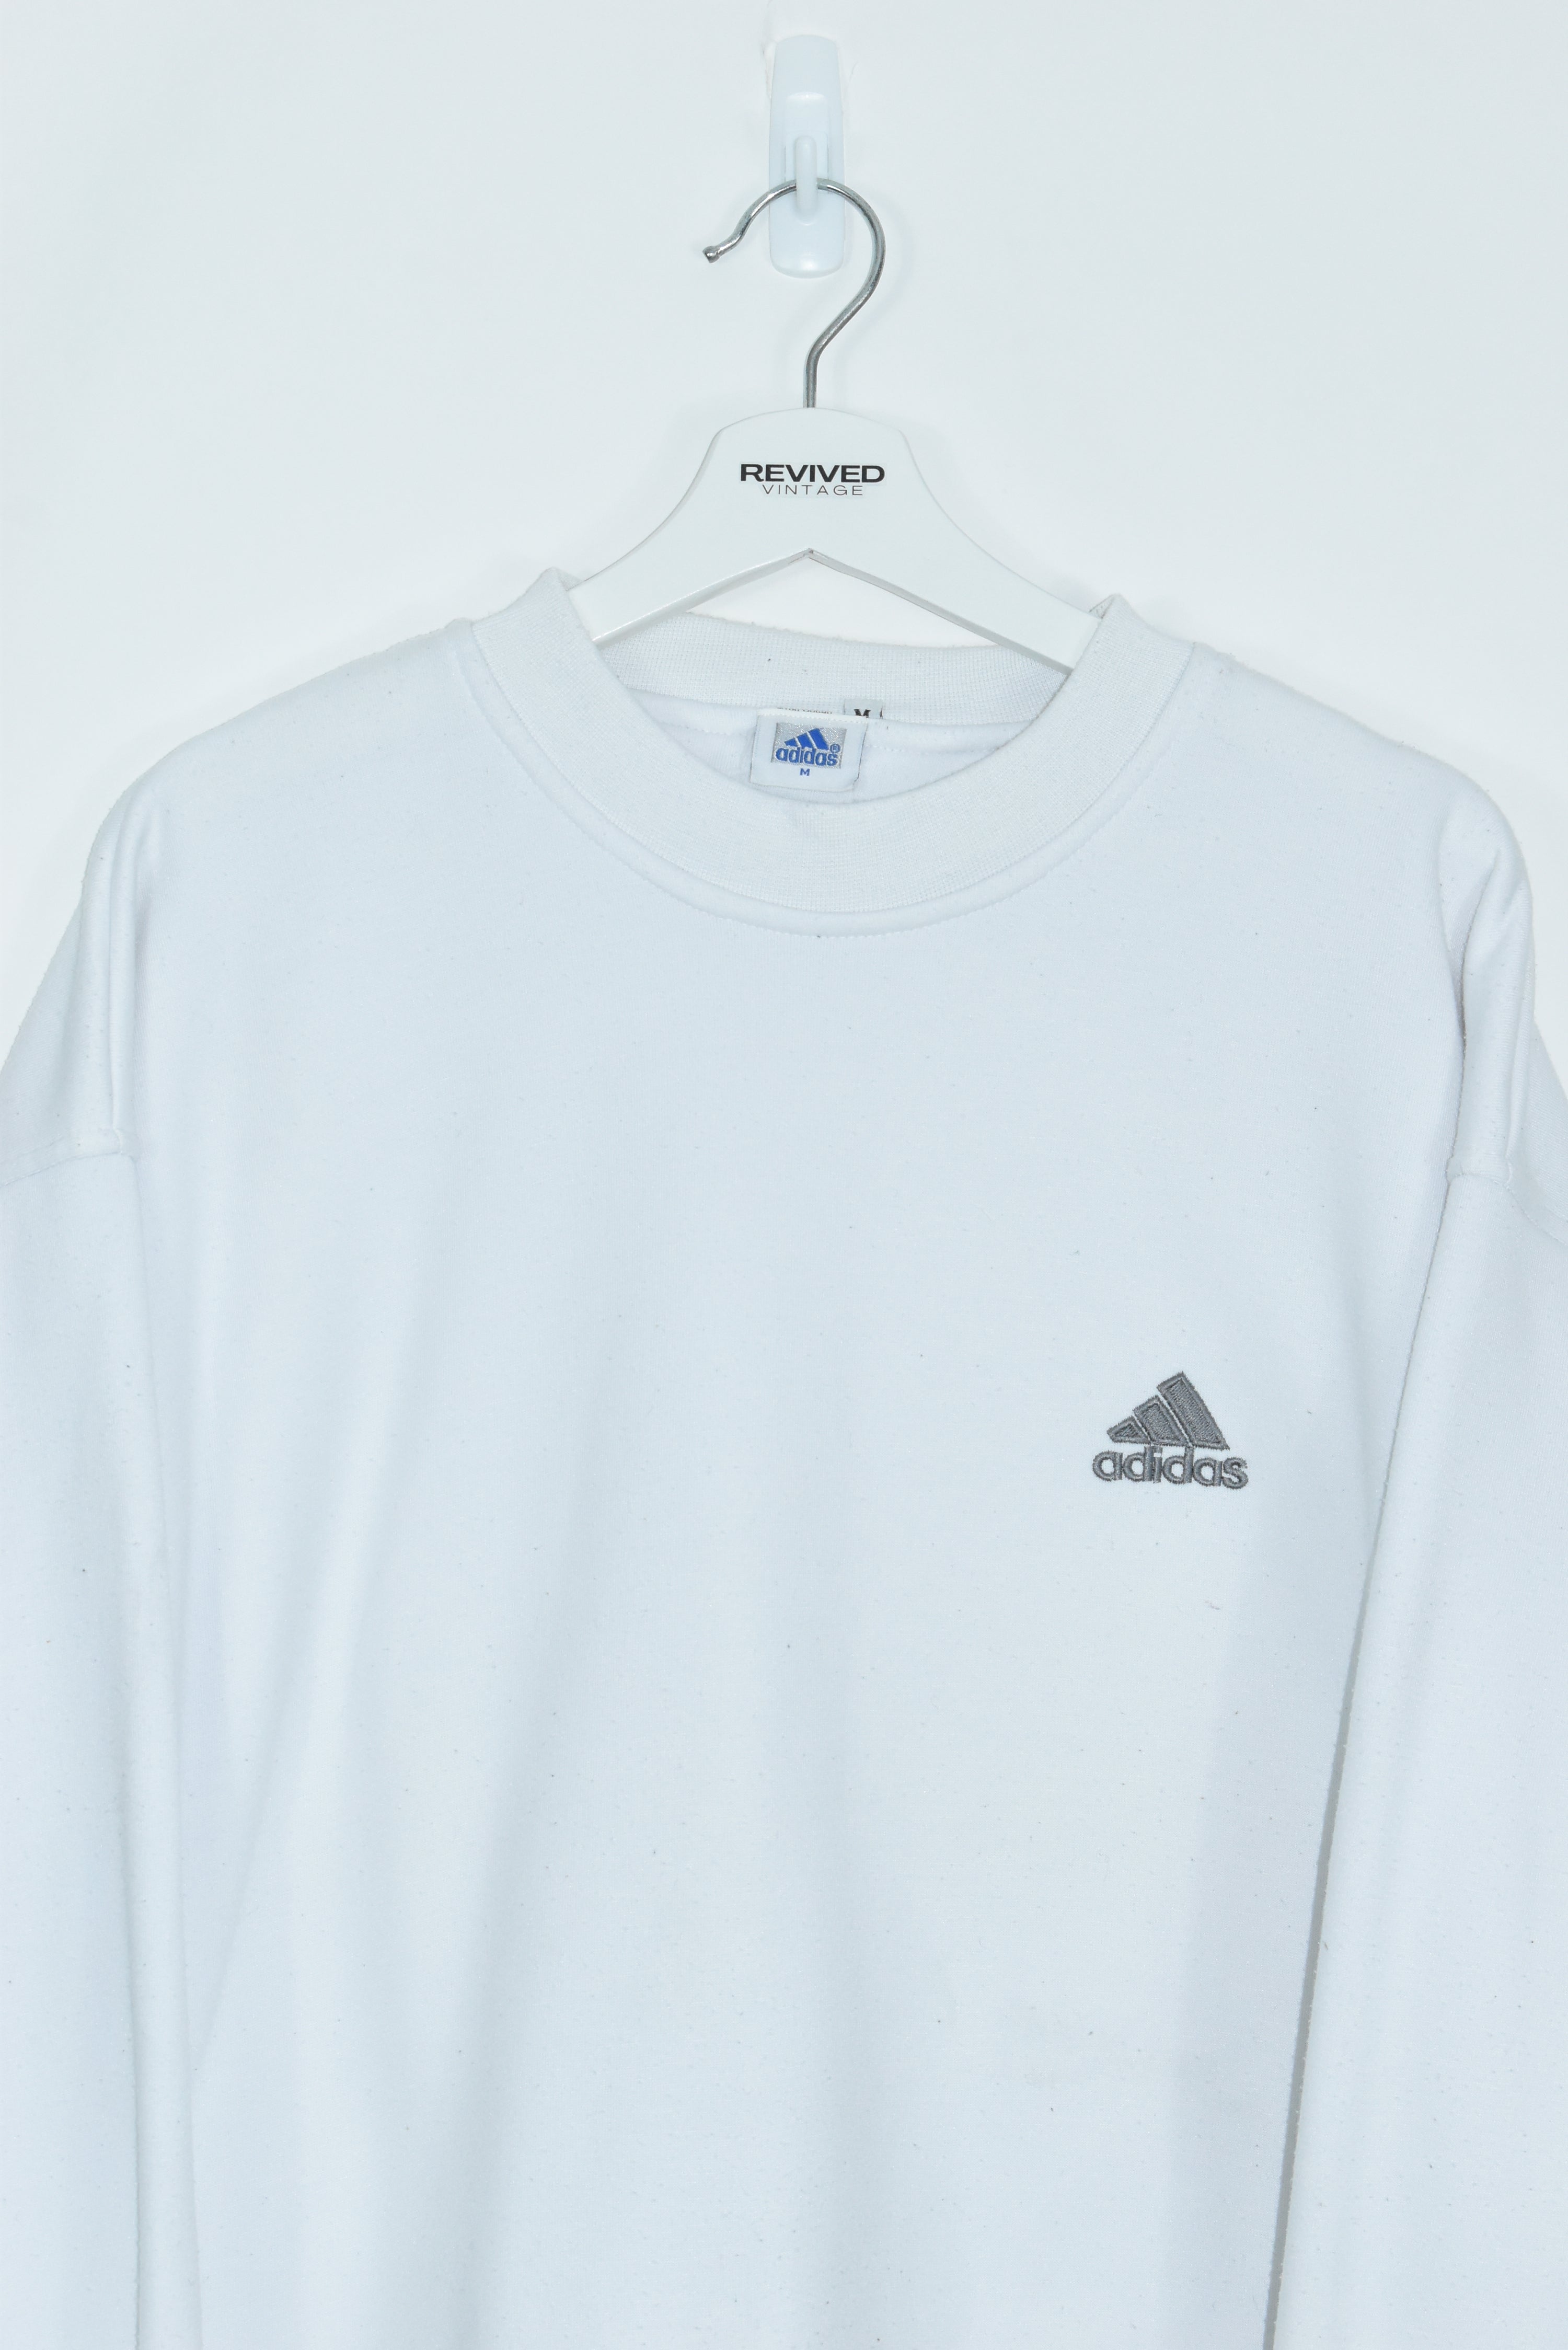 Vintage Adidas Embroidery Small Logo Sweatshirt Medium